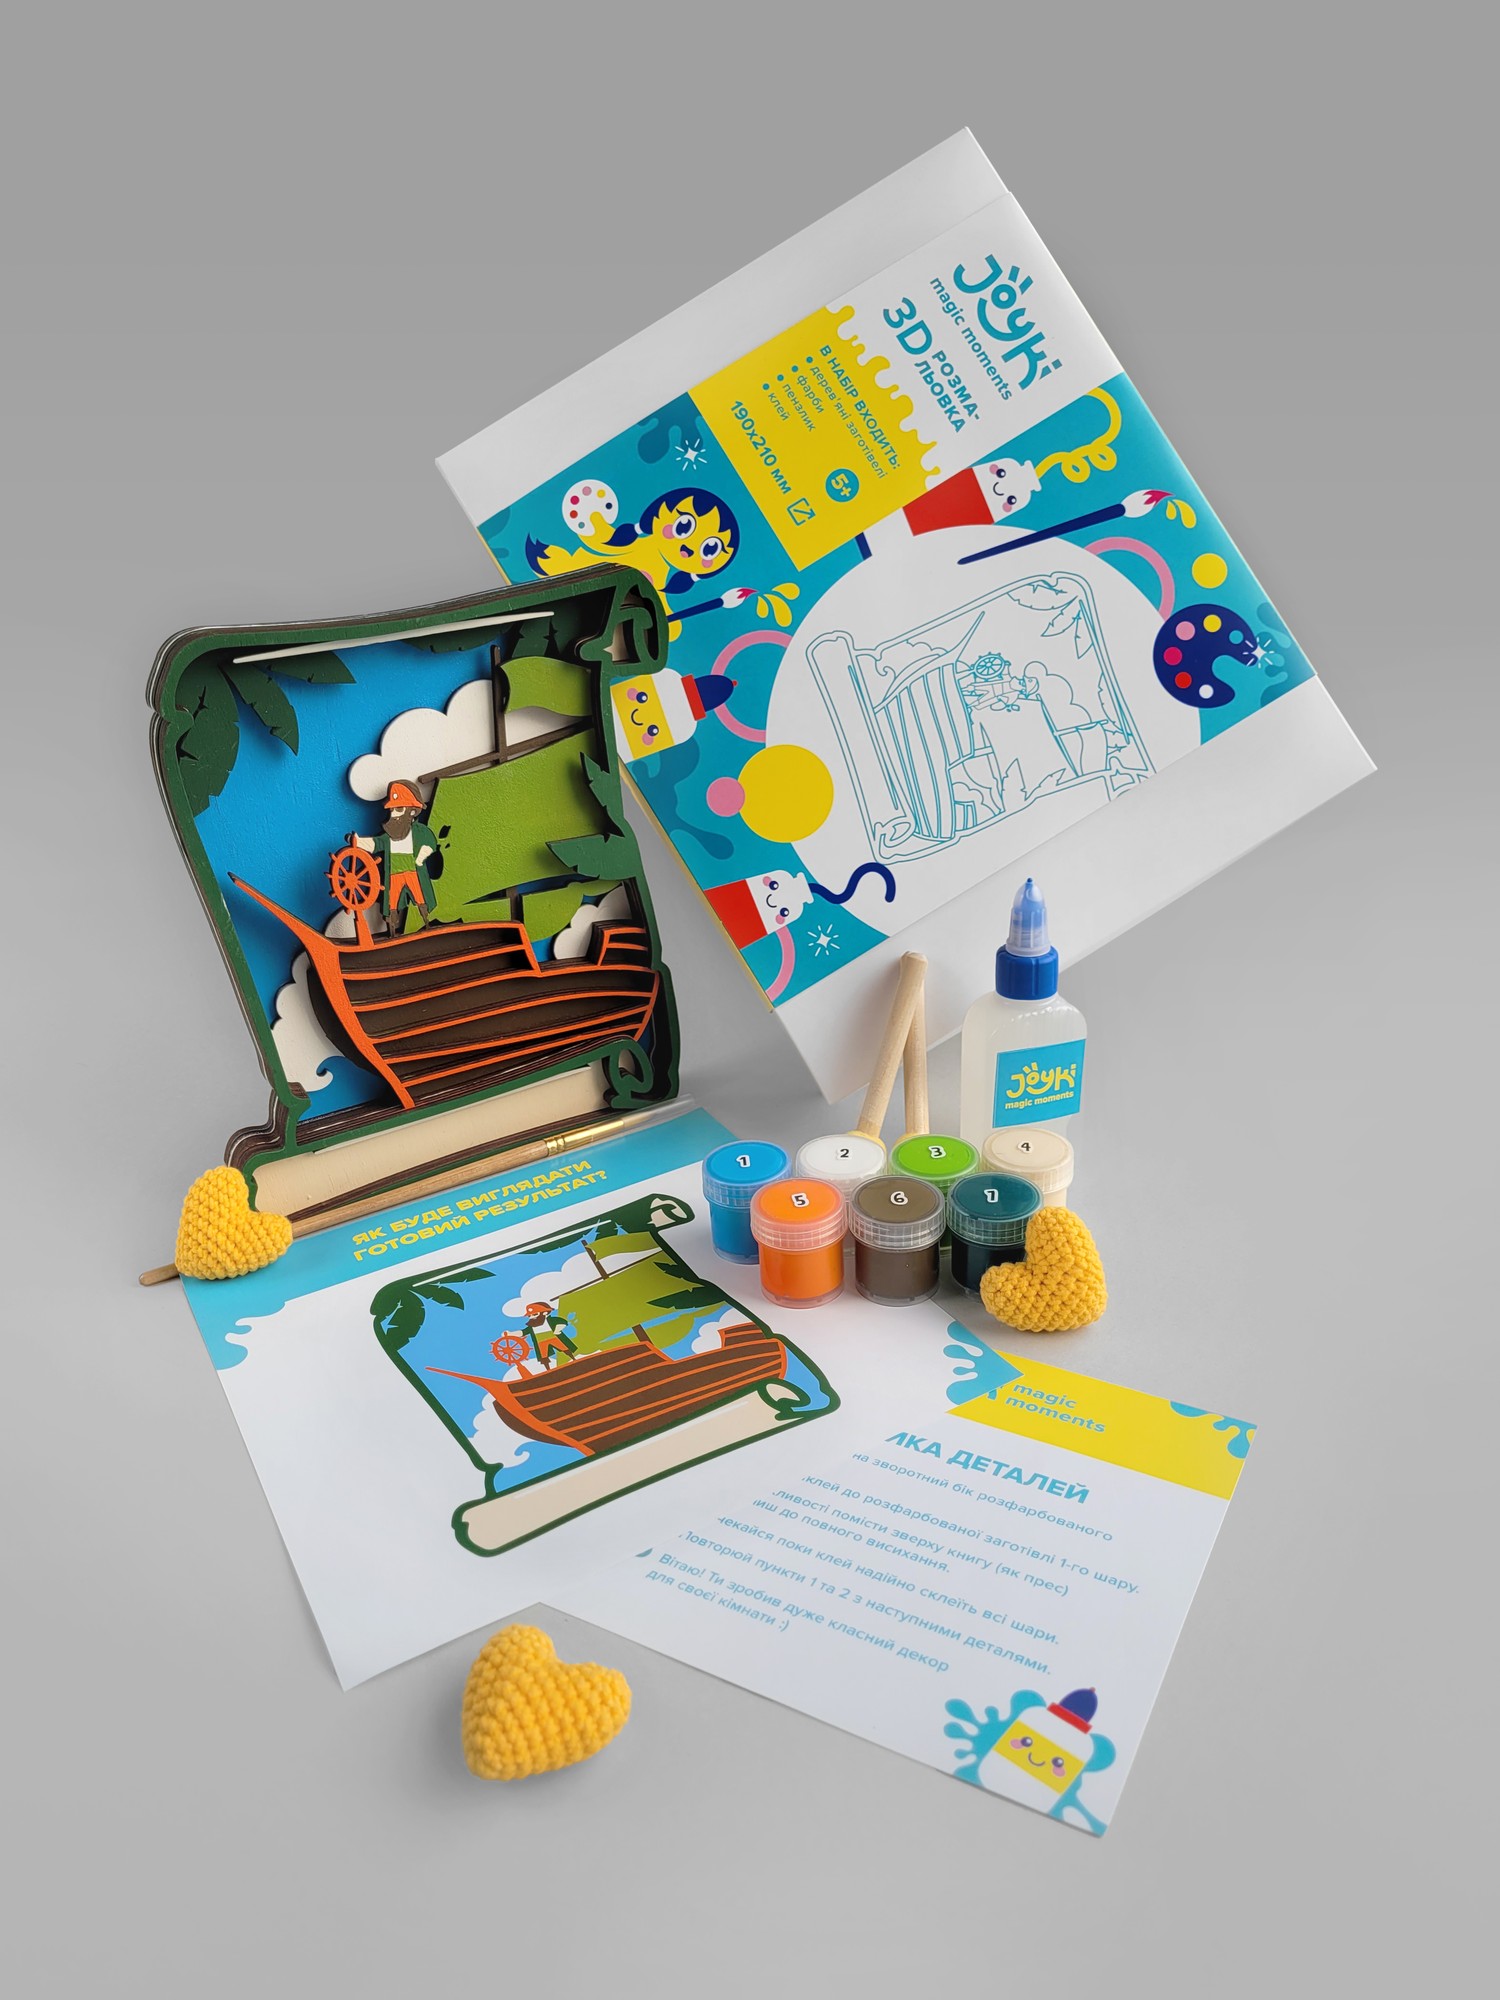 Joyki 3d wooden coloring book creativity kit «Pirate»